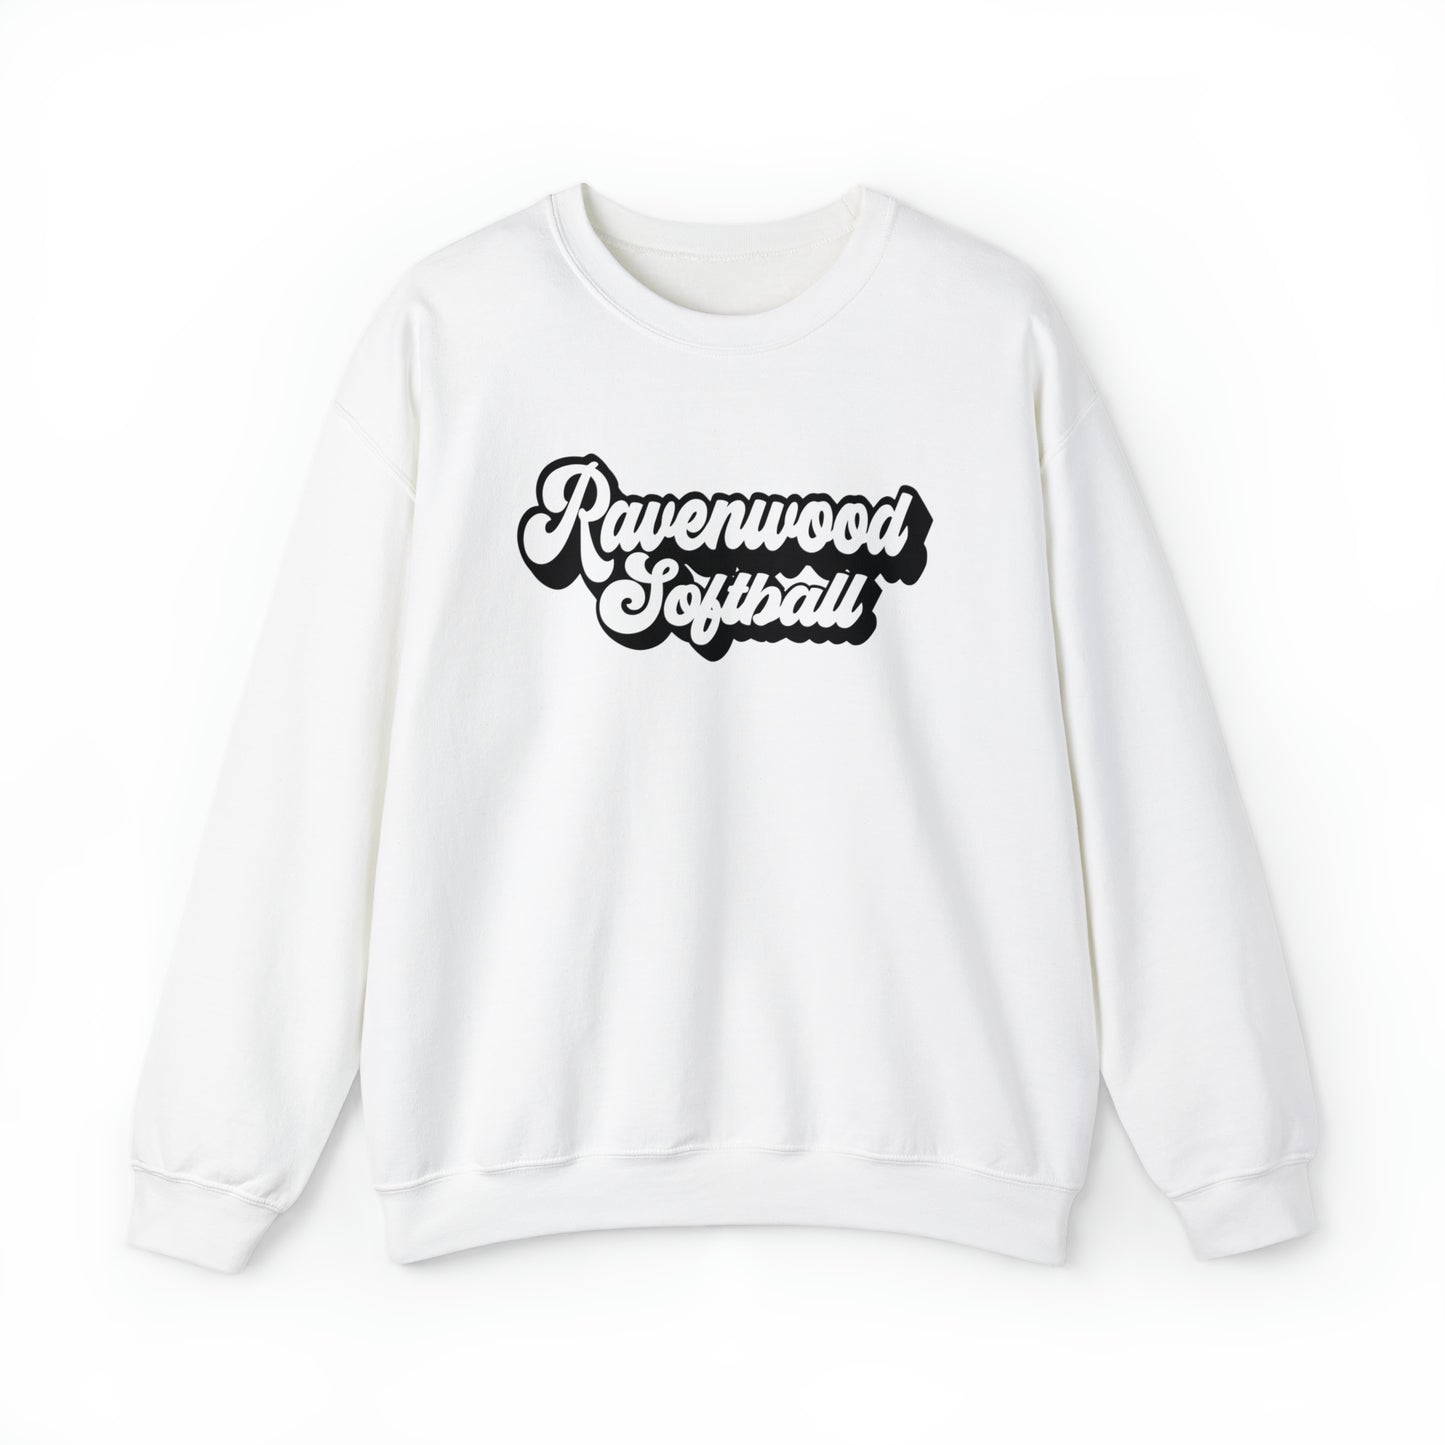 Ravenwood Lettering Crewneck Sweatshirt